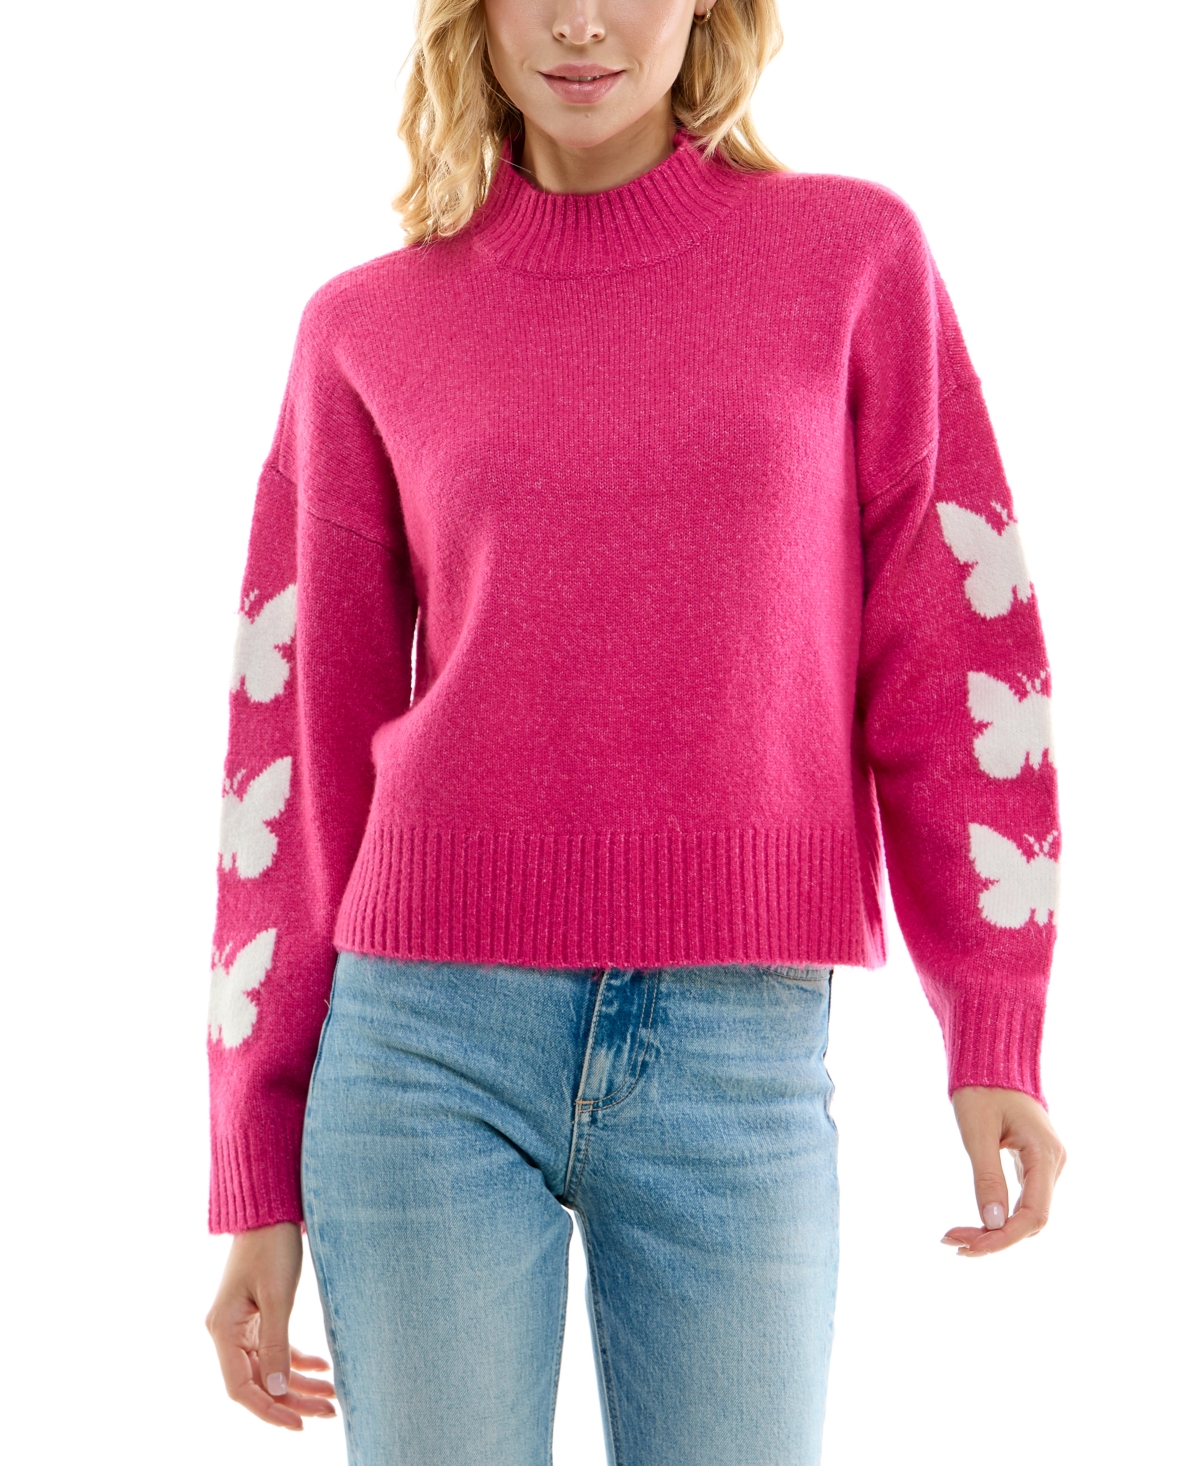 Juniors' Butterflies Mock-Turtleneck Sweater - Pink Butterfly